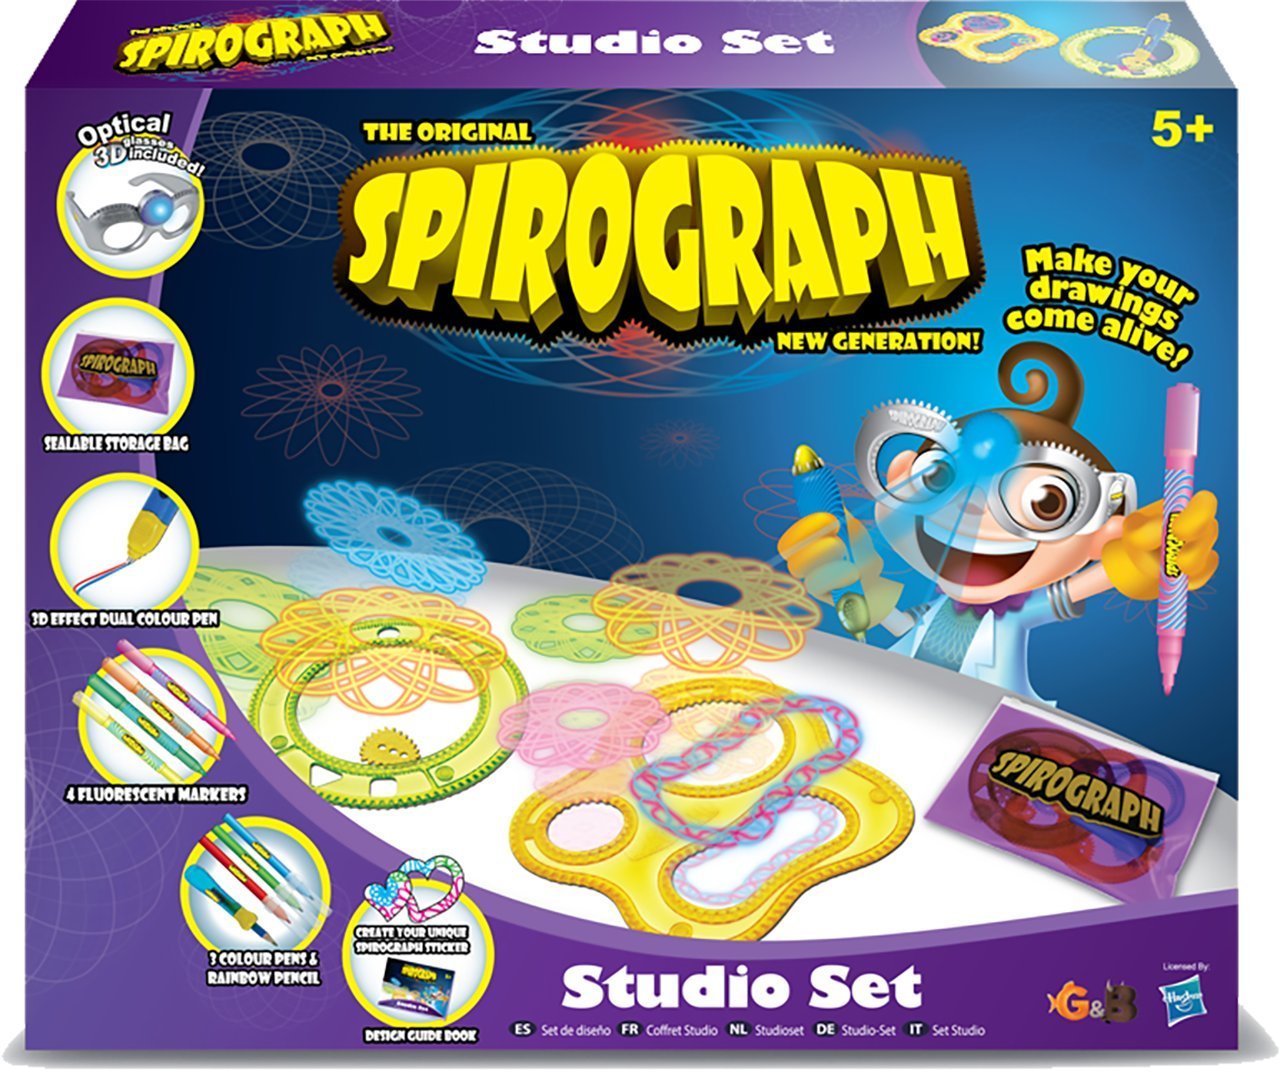 Win 1 of Spirograph Optical 3D Studio Sets